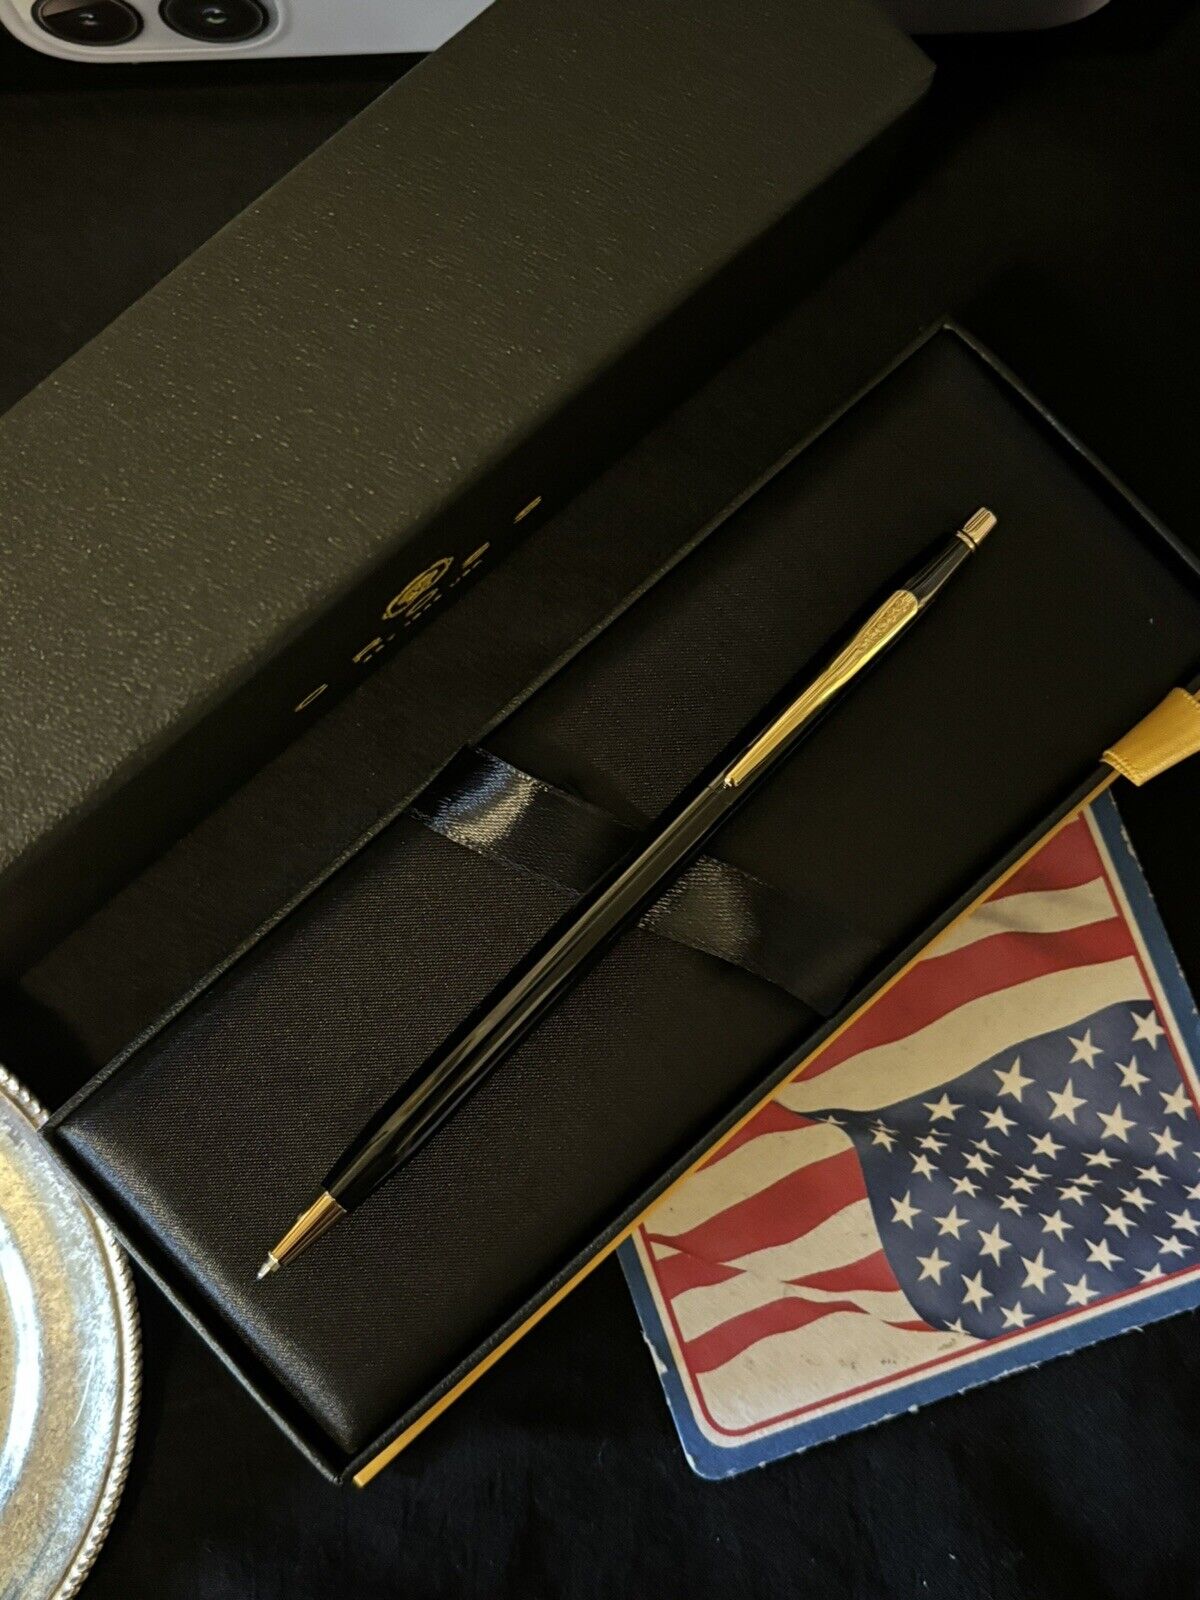 NEW Cross Classic Century Titanium PVD 23kt Gold Appts. Black Ballpoint Pen $200